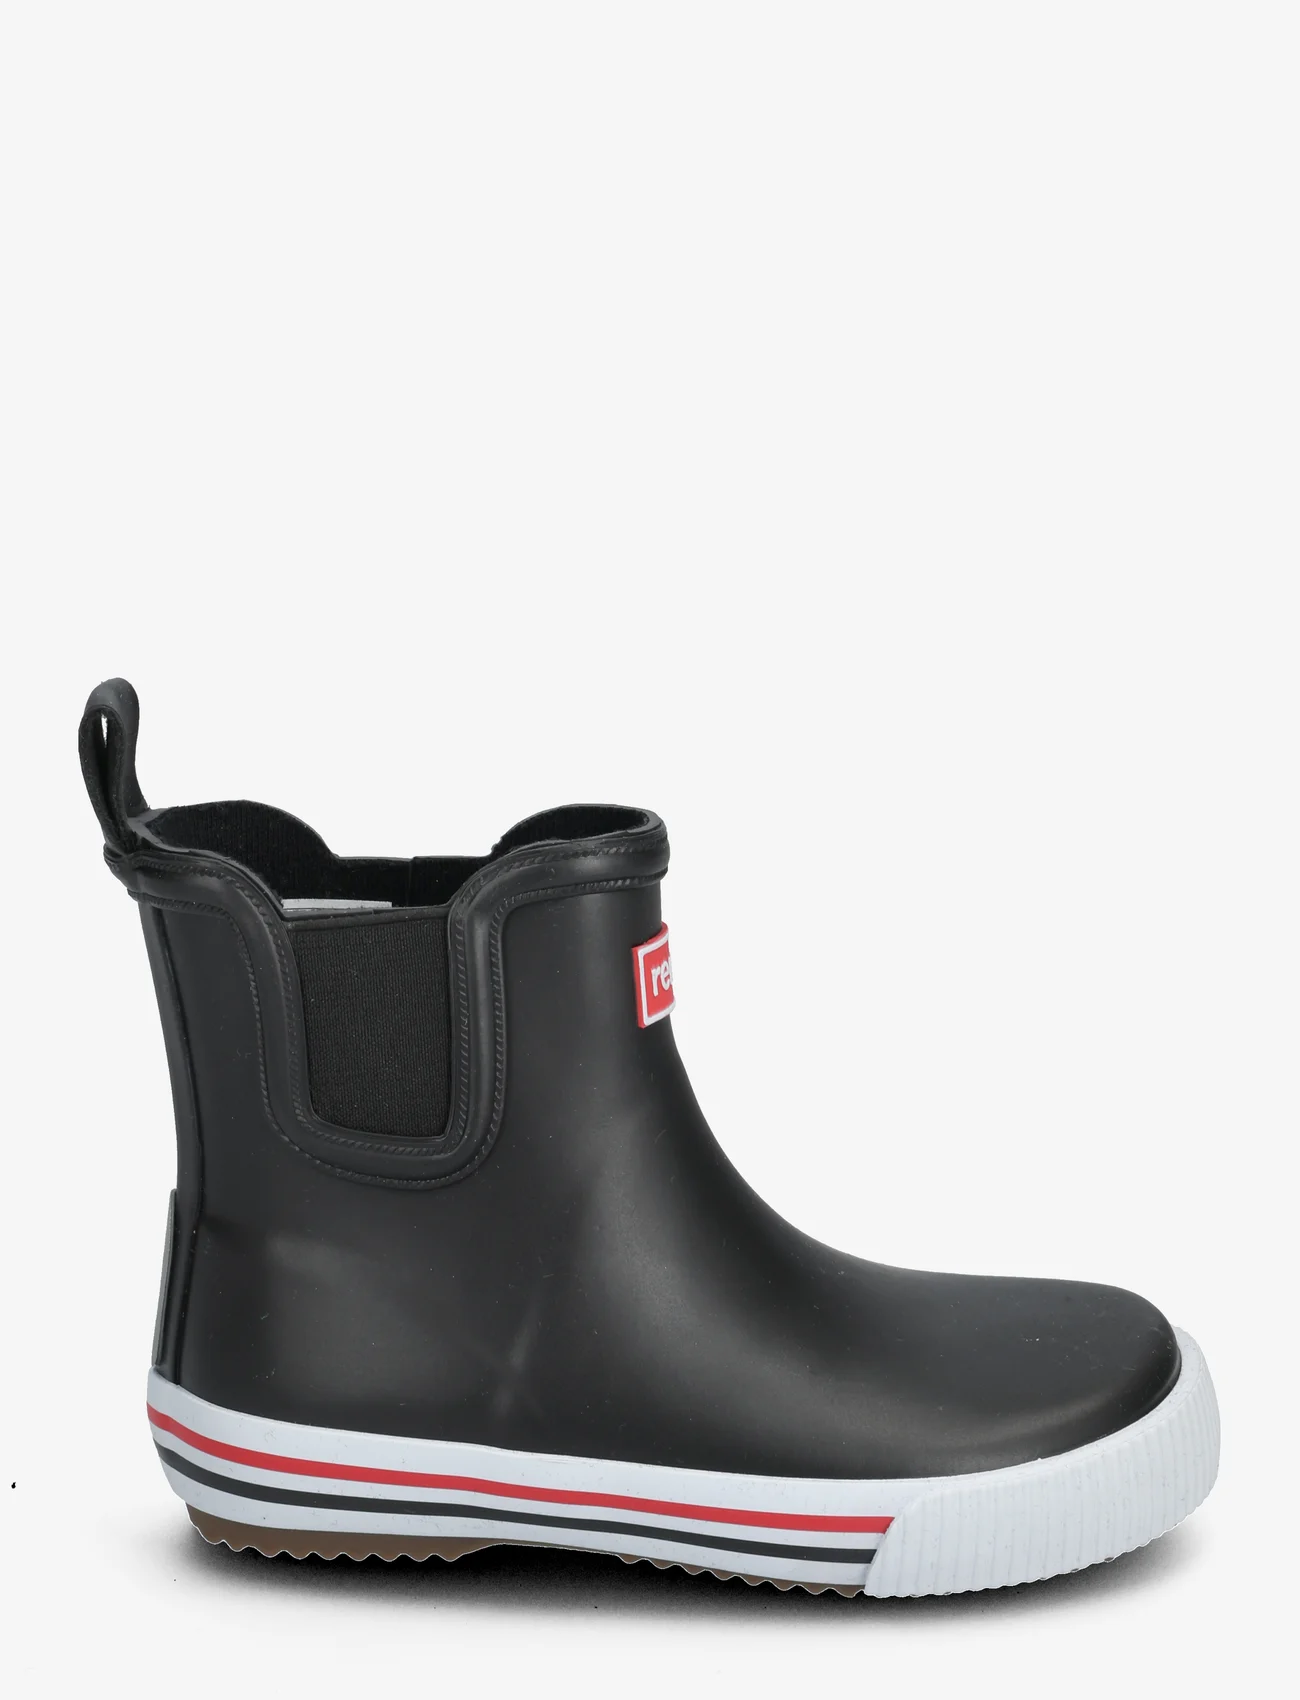 Reima - Rain boots, Ankles - ungefütterte gummistiefel - black - 1